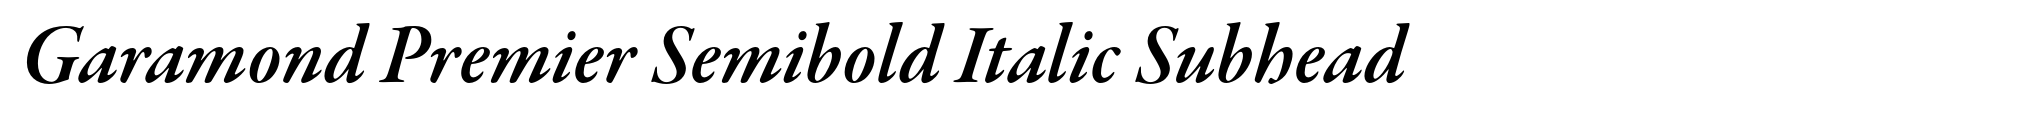 Garamond Premier Semibold Italic Subhead image